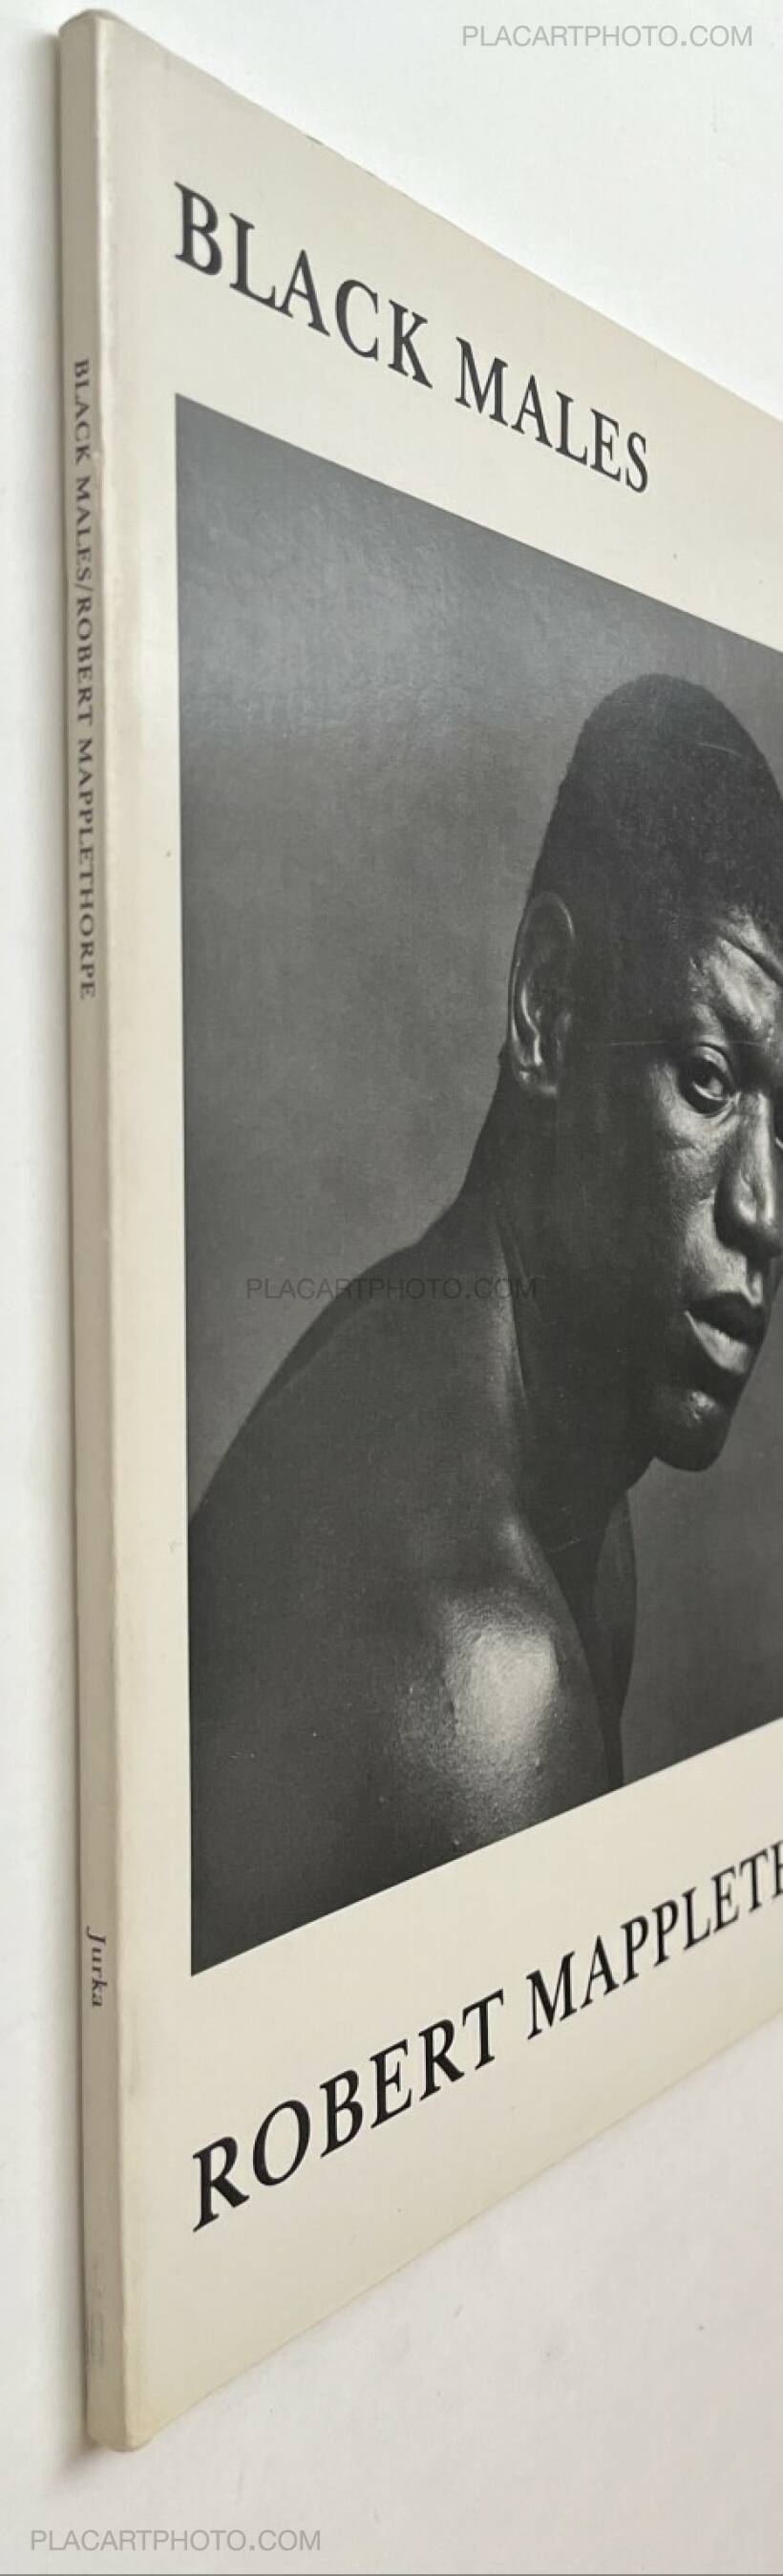 Robert Mapplethorpe: Black Males, Galerie Jurka, 1980 | Bookshop 